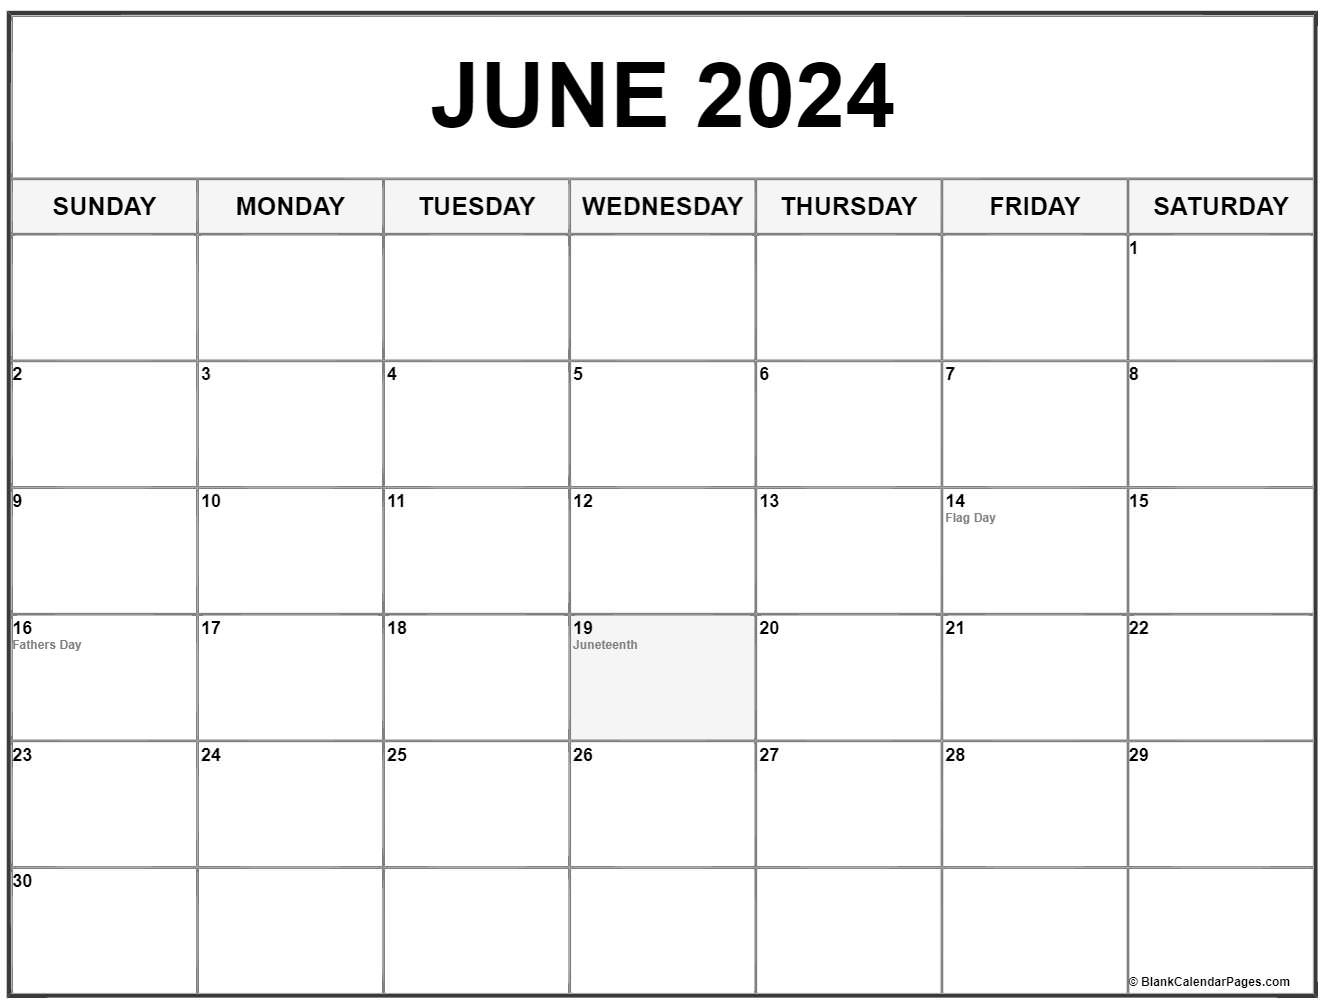 June 2024 With Holidays Calendar regarding June Calendar 2024 With Holidays